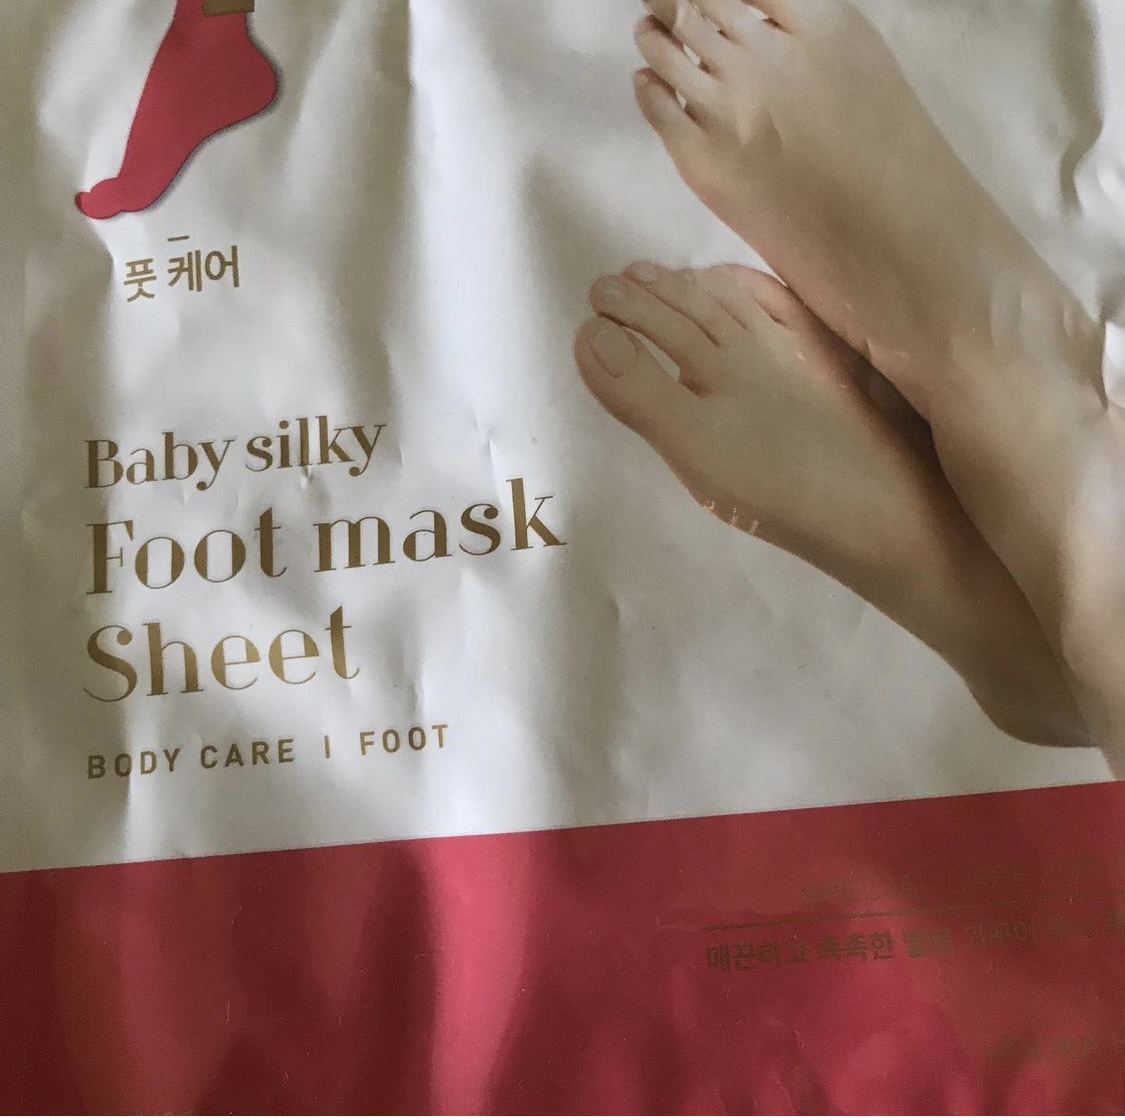 Holika Holika baby silky foot mask sheet